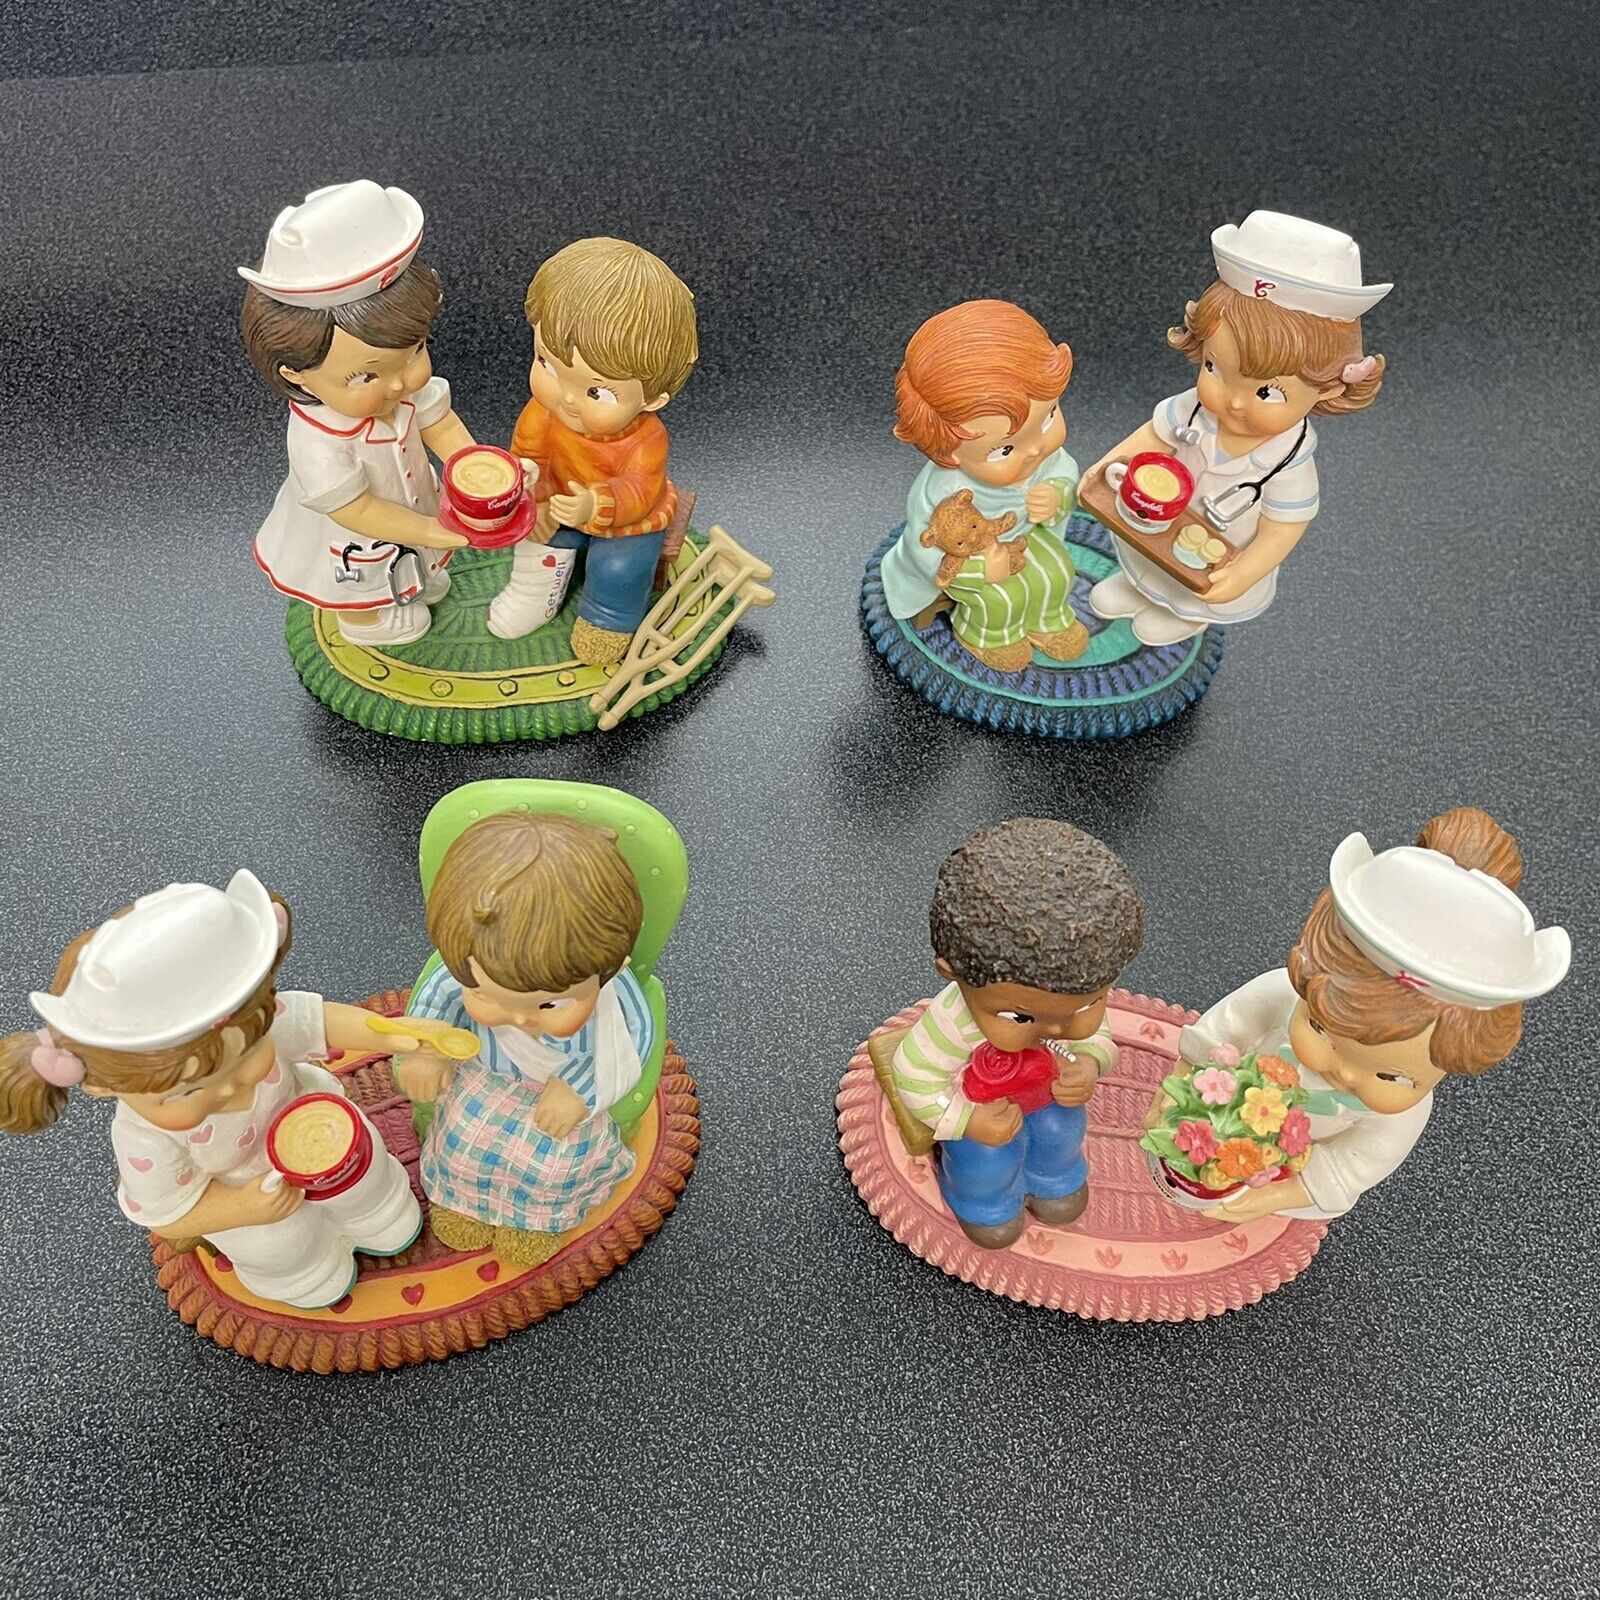 The Campbell Kids Nurses Nourish the Soul, set of 4 figurines